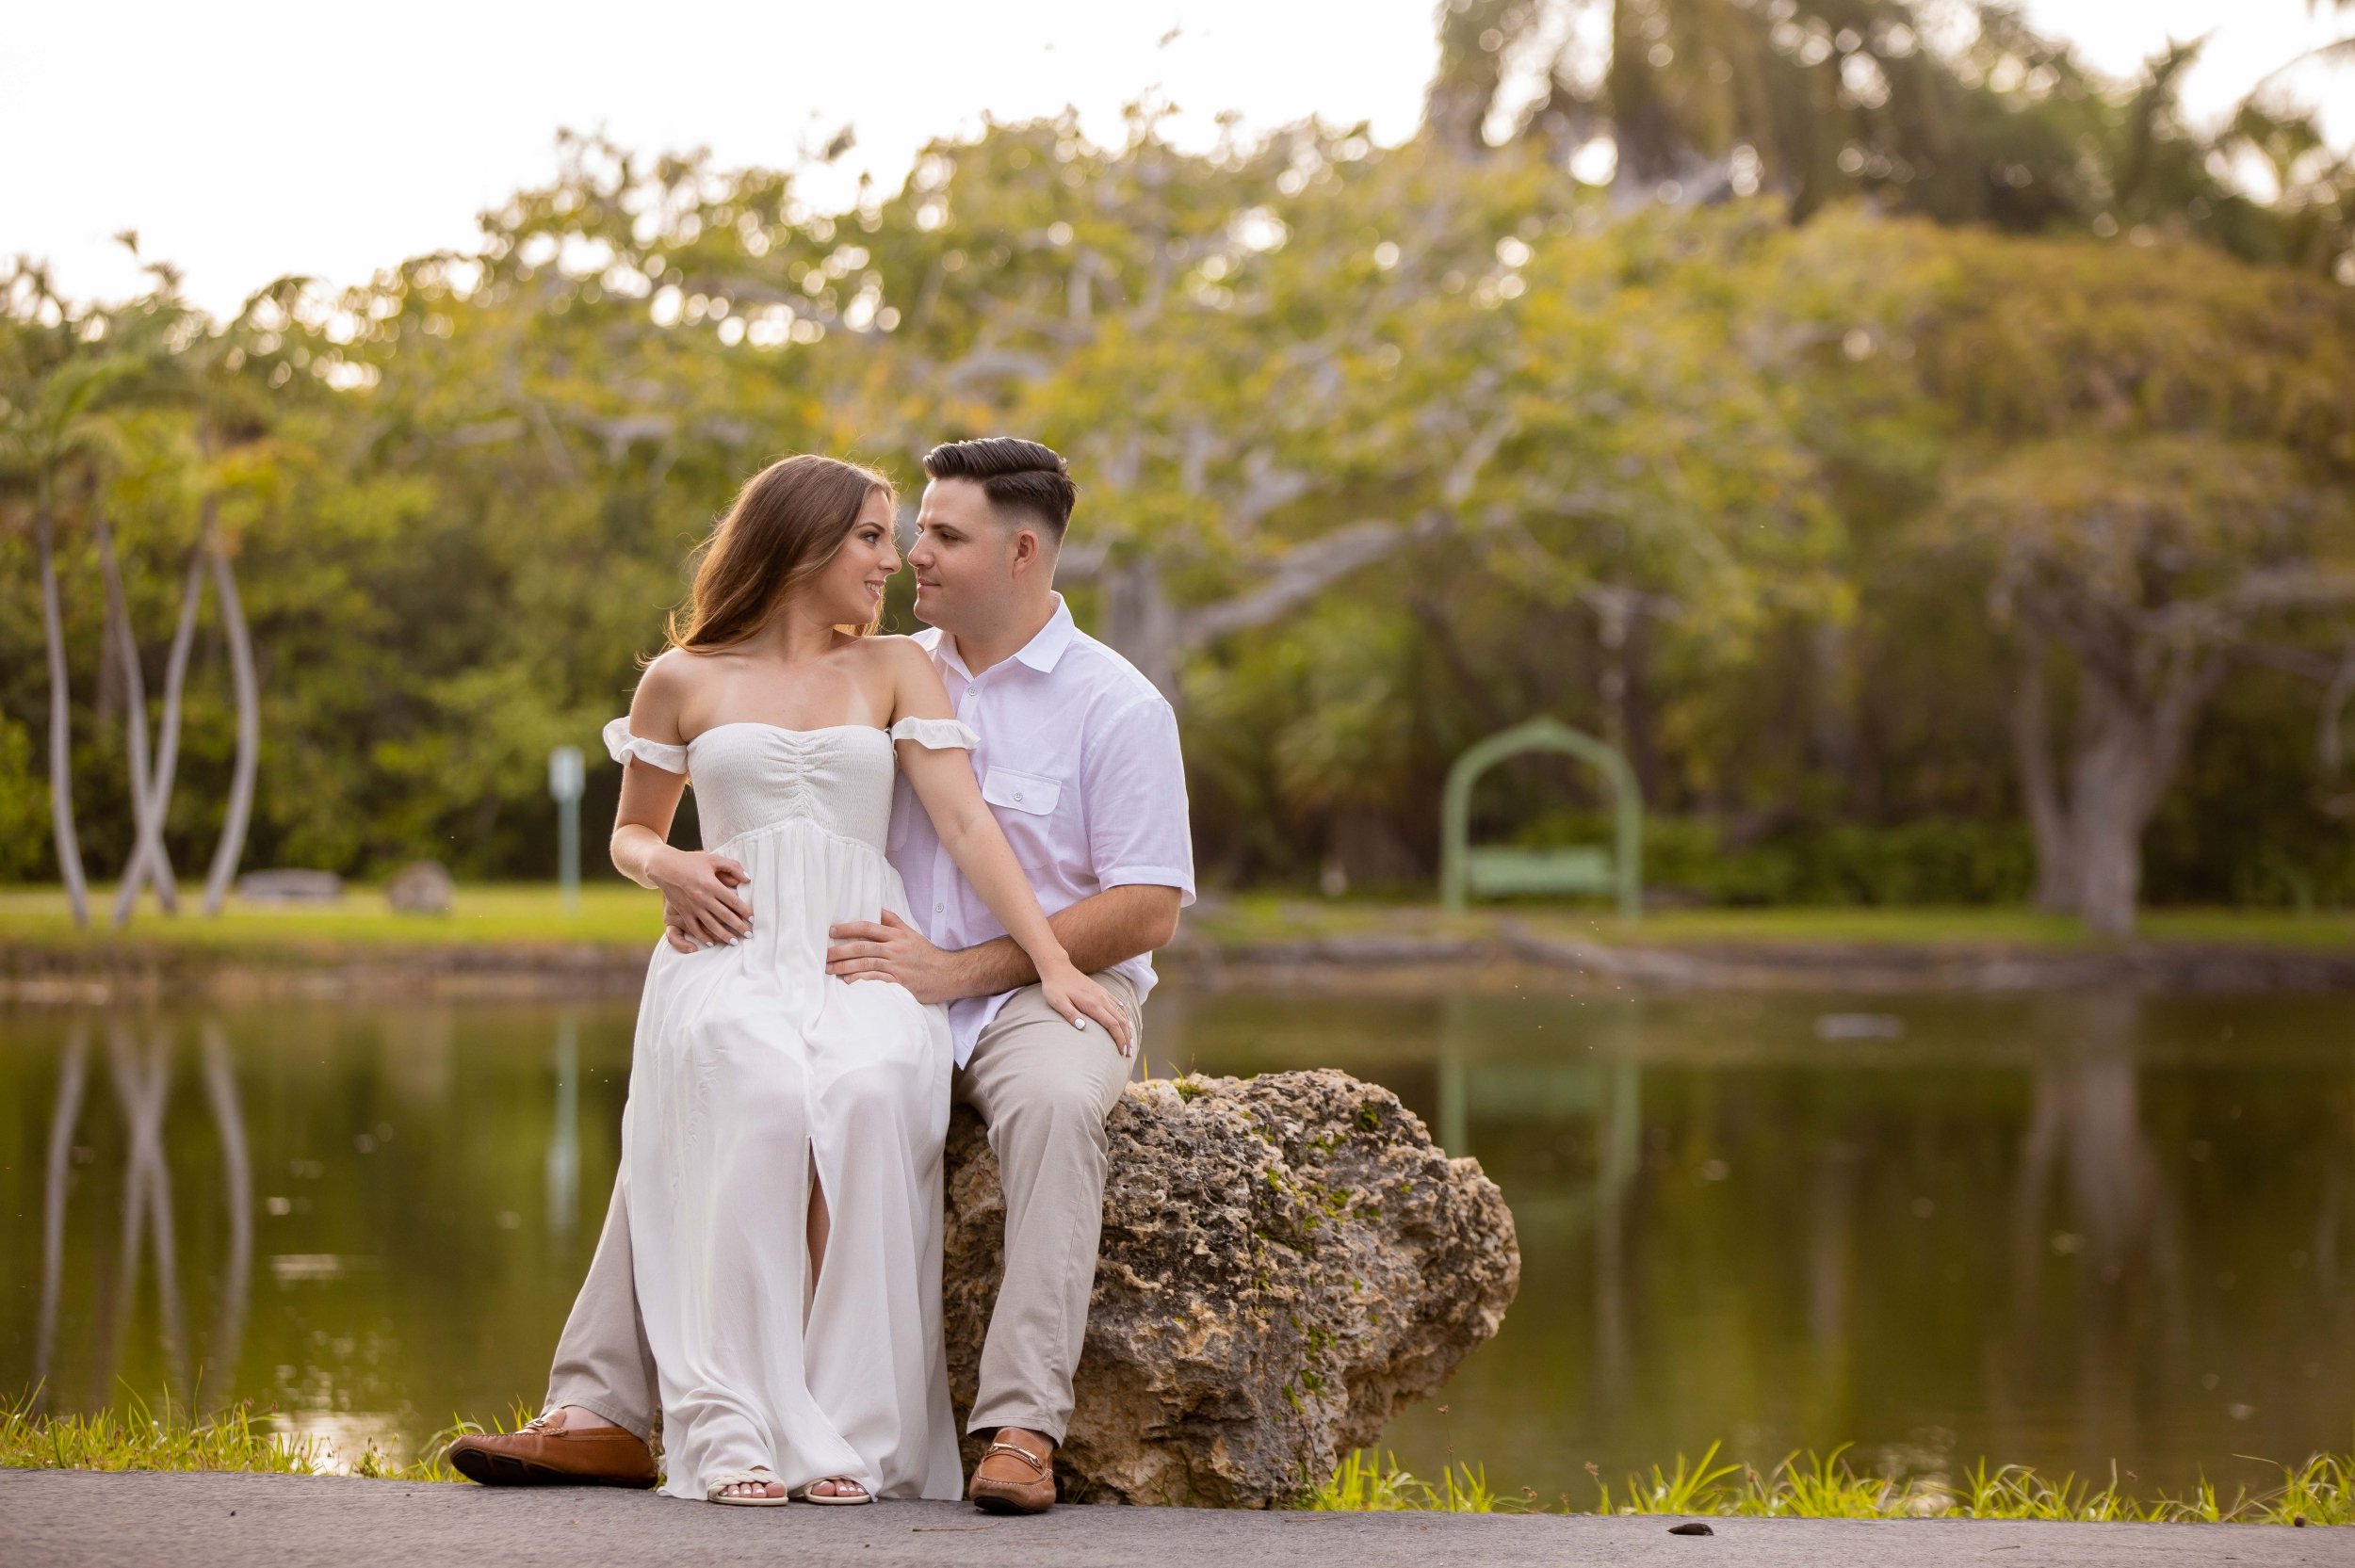 Engagement Session at Crandon Park - Miami Wedding Photographers - Santy Martinez 6.jpg